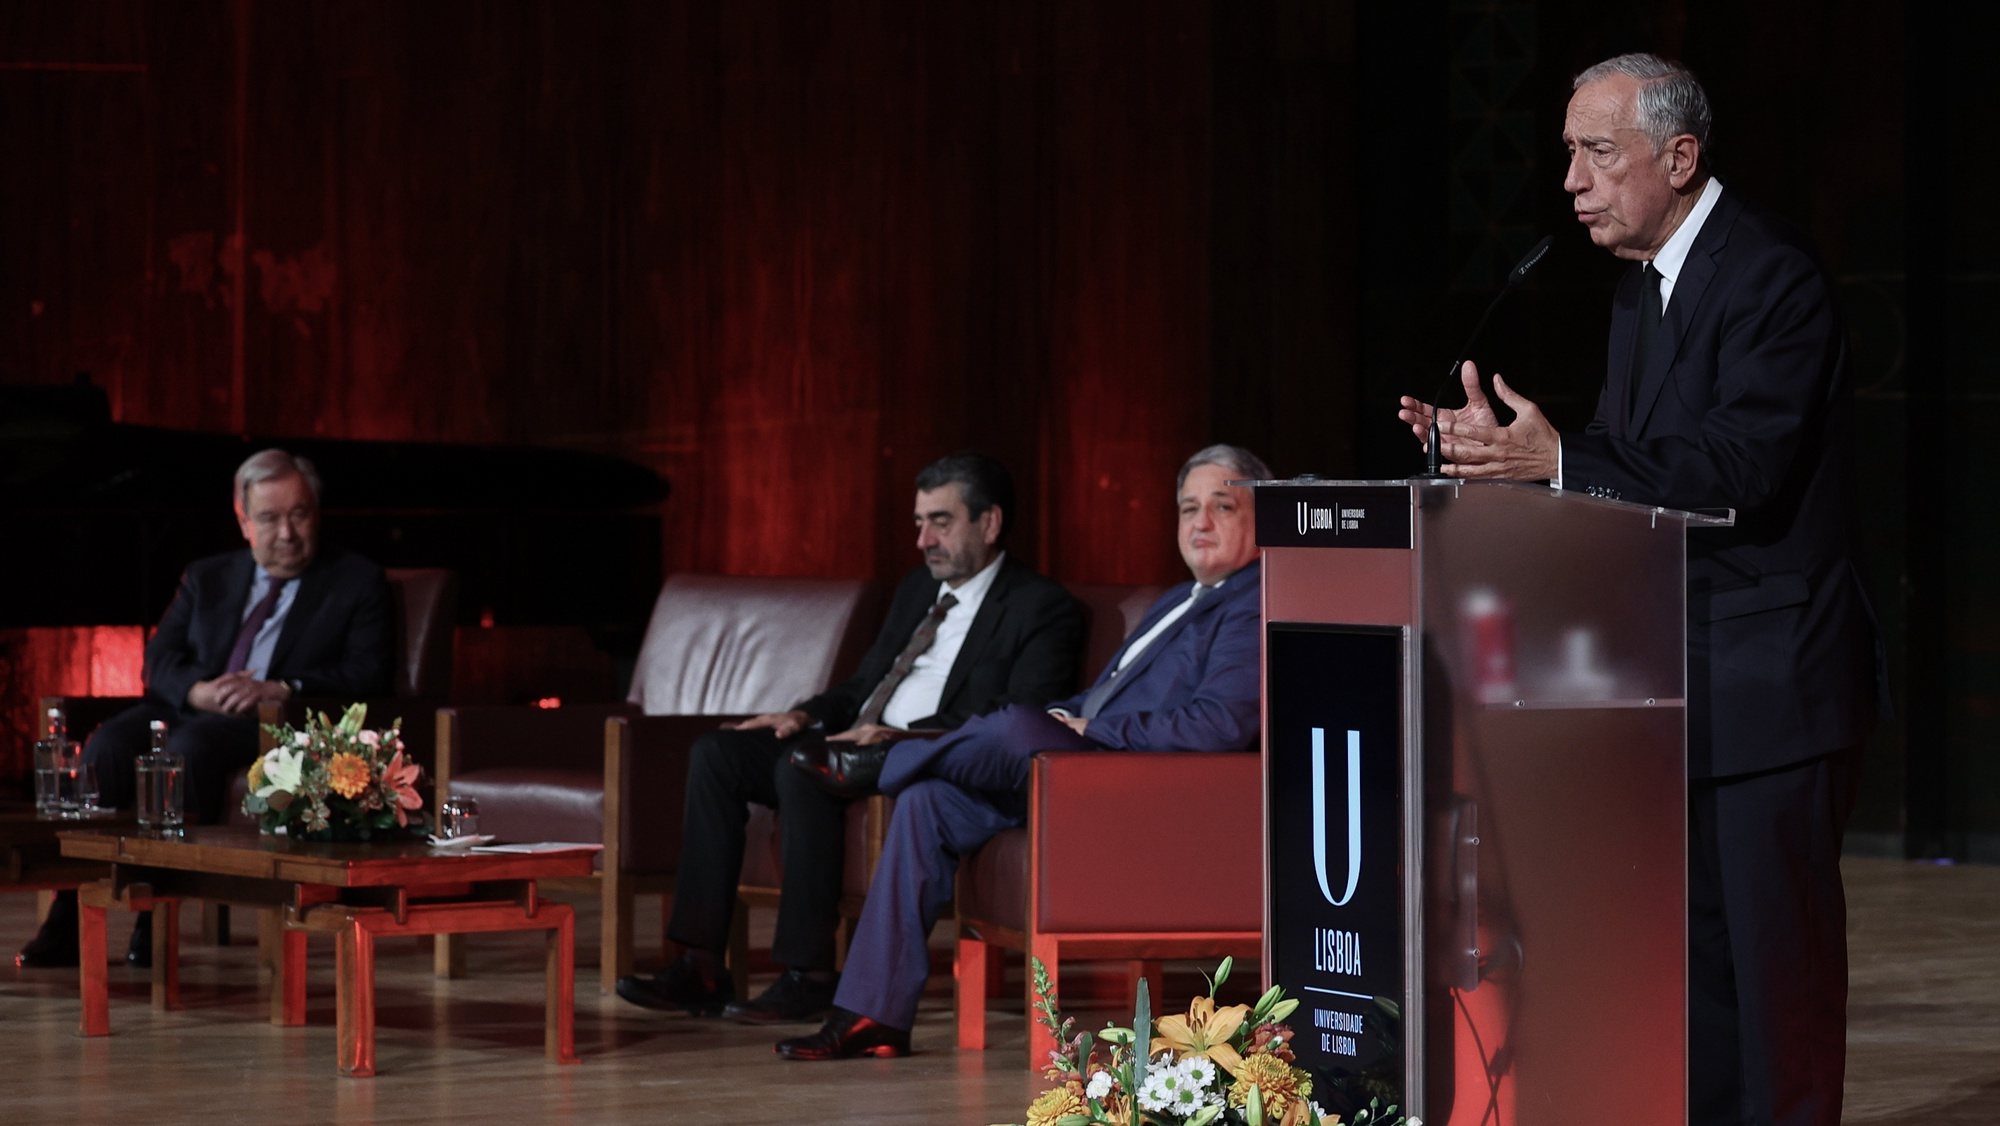 O Presidente da República, Marcelo Rebelo de Sousa, discursa durante a cerimónia de entrega do prémio Universidade de Lisboa 2020 ao secretário-Geral das Nações Unidas, António Guterres (E), em Lisboa, 05 de janeiro de 2023. ANTÓNIO COTRIM/LUSA